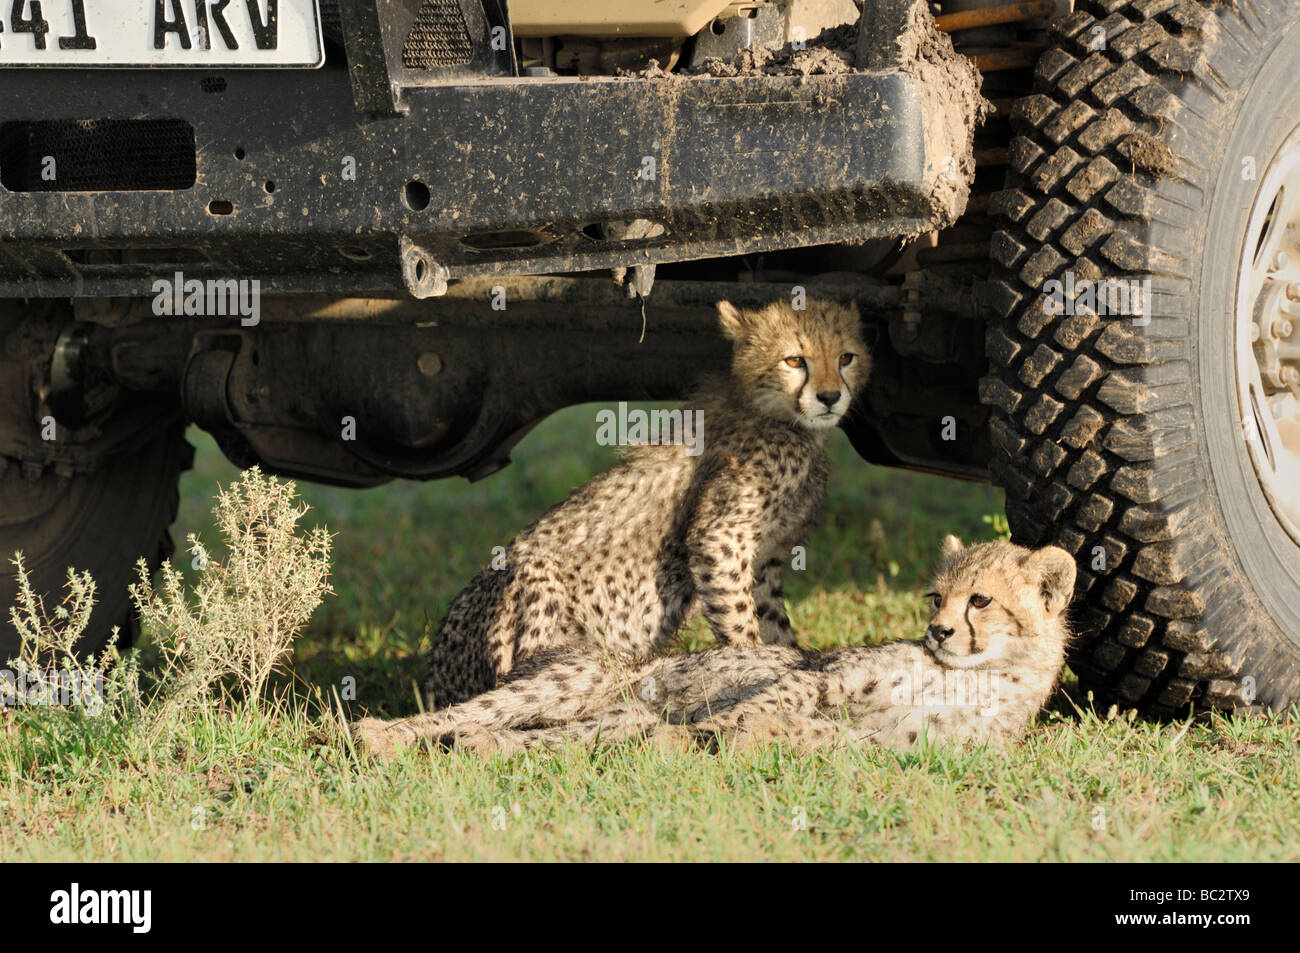 Stock photo of cheetah cubs playing by a safari truck, Ndutu, Tanzania, February 2009. Stock Photo